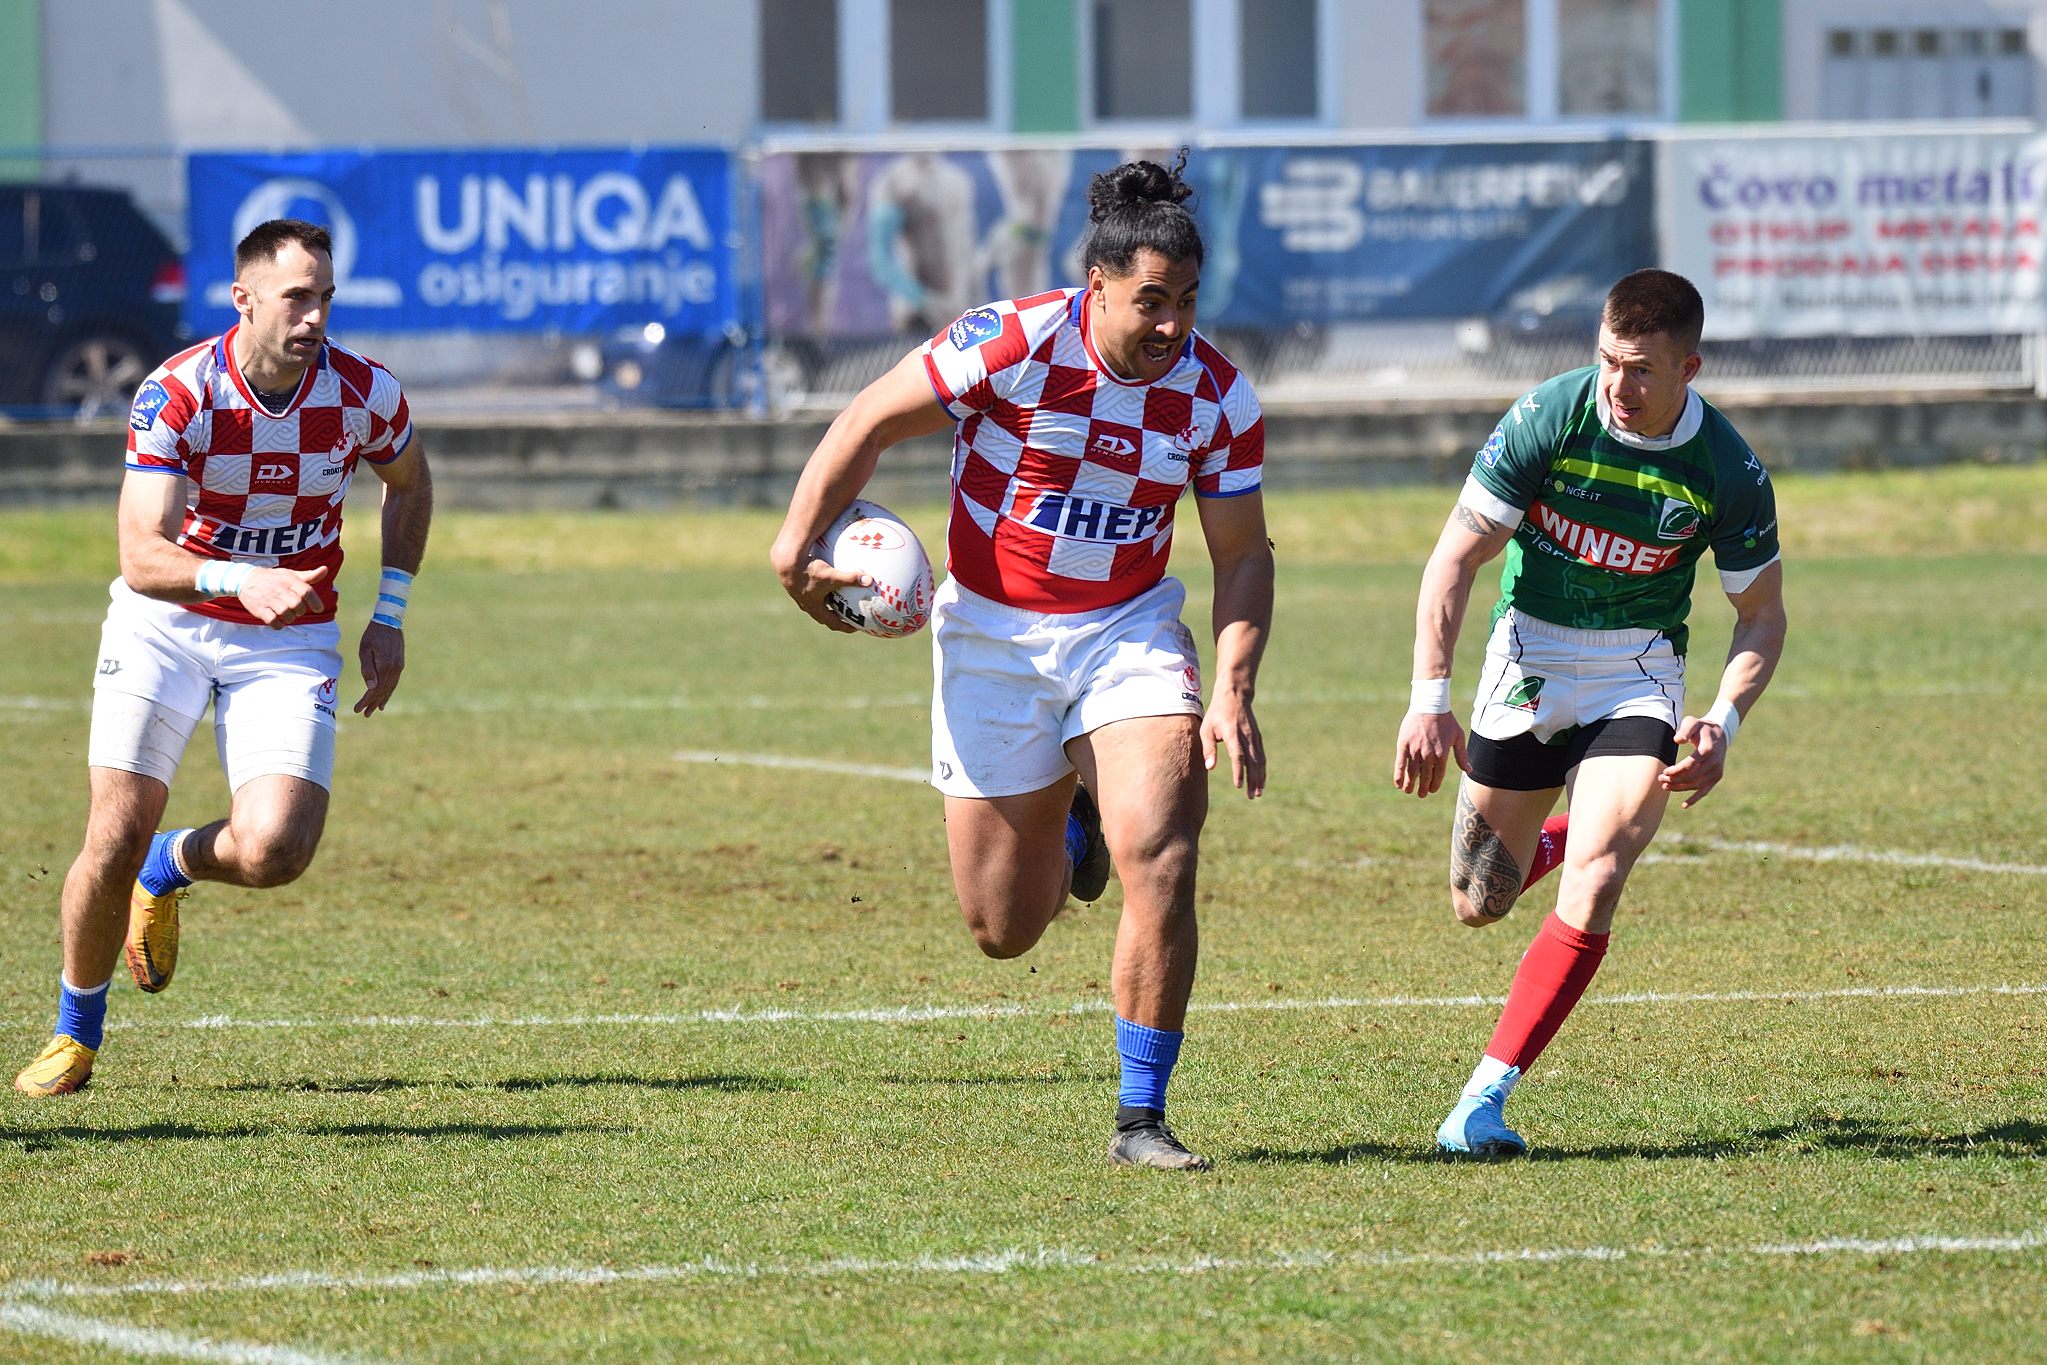 Samoan-Croatian brothers bolster Croatia rugby team ahead of big European Trophy matches 